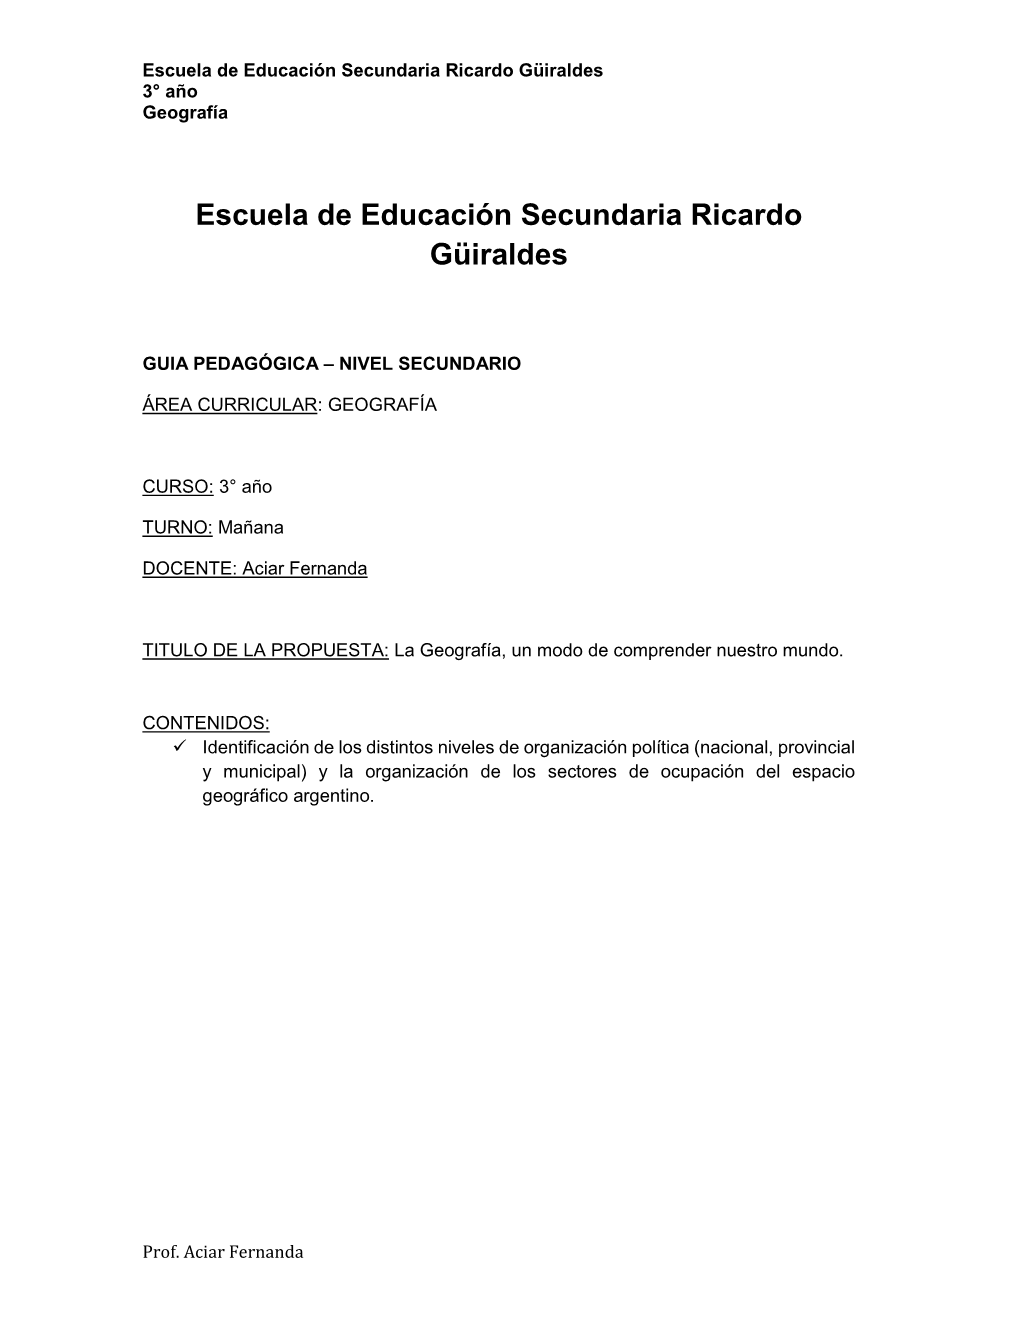 Escuela De Educación Secundaria Ricardo Güiraldes 3° Año Geografía